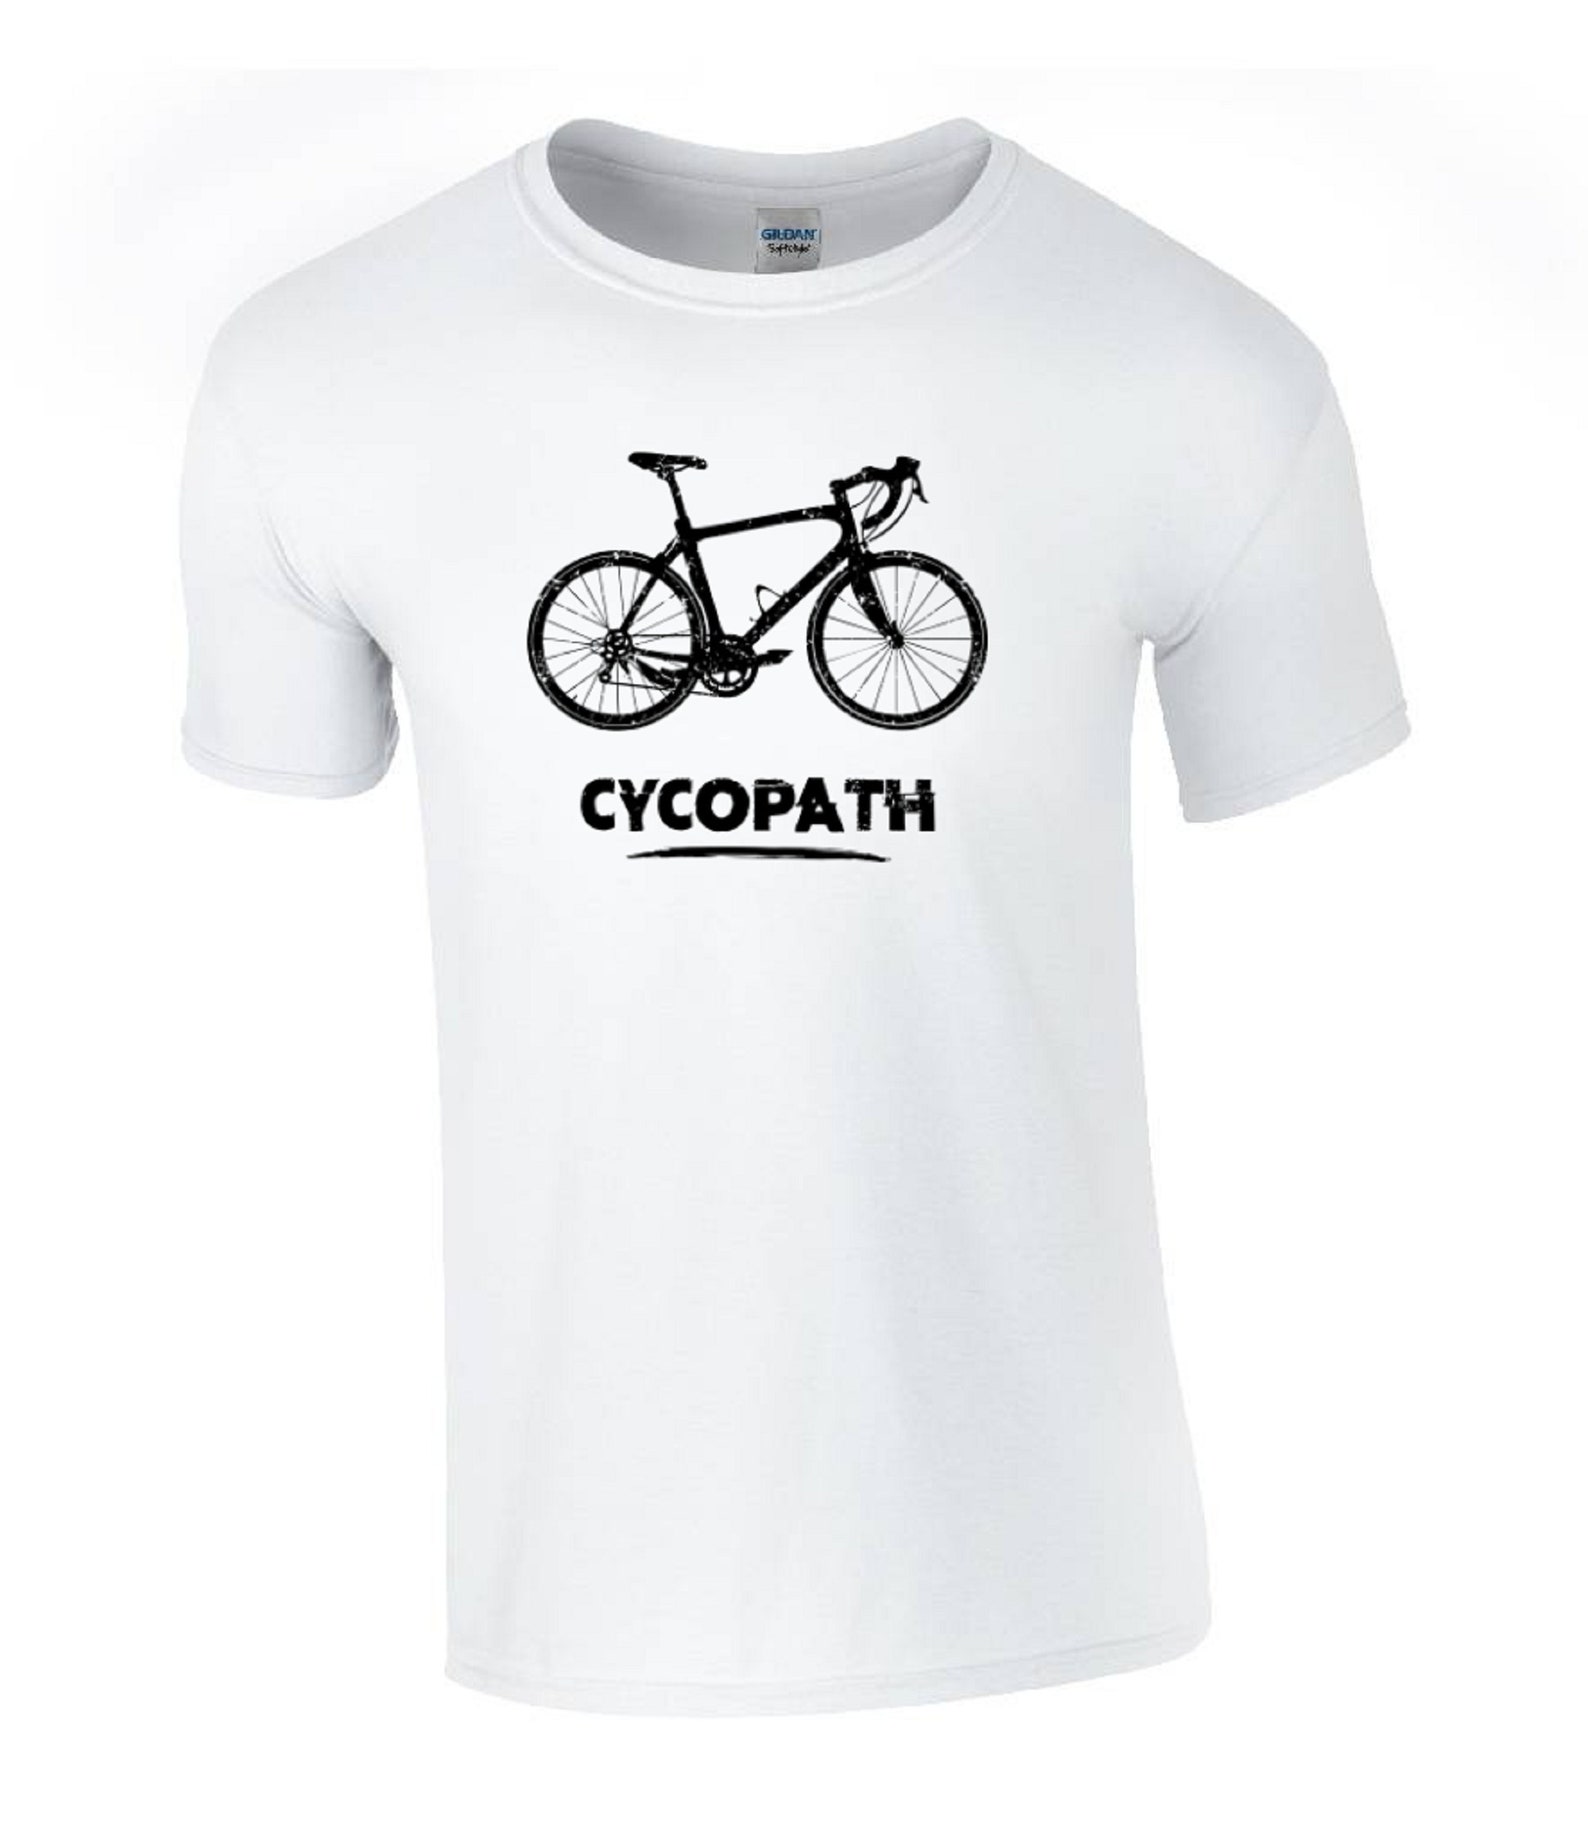 CYCOPATH: Cyclist T-Shirt. Unique Cycling T-Shirt. Choice of | Etsy